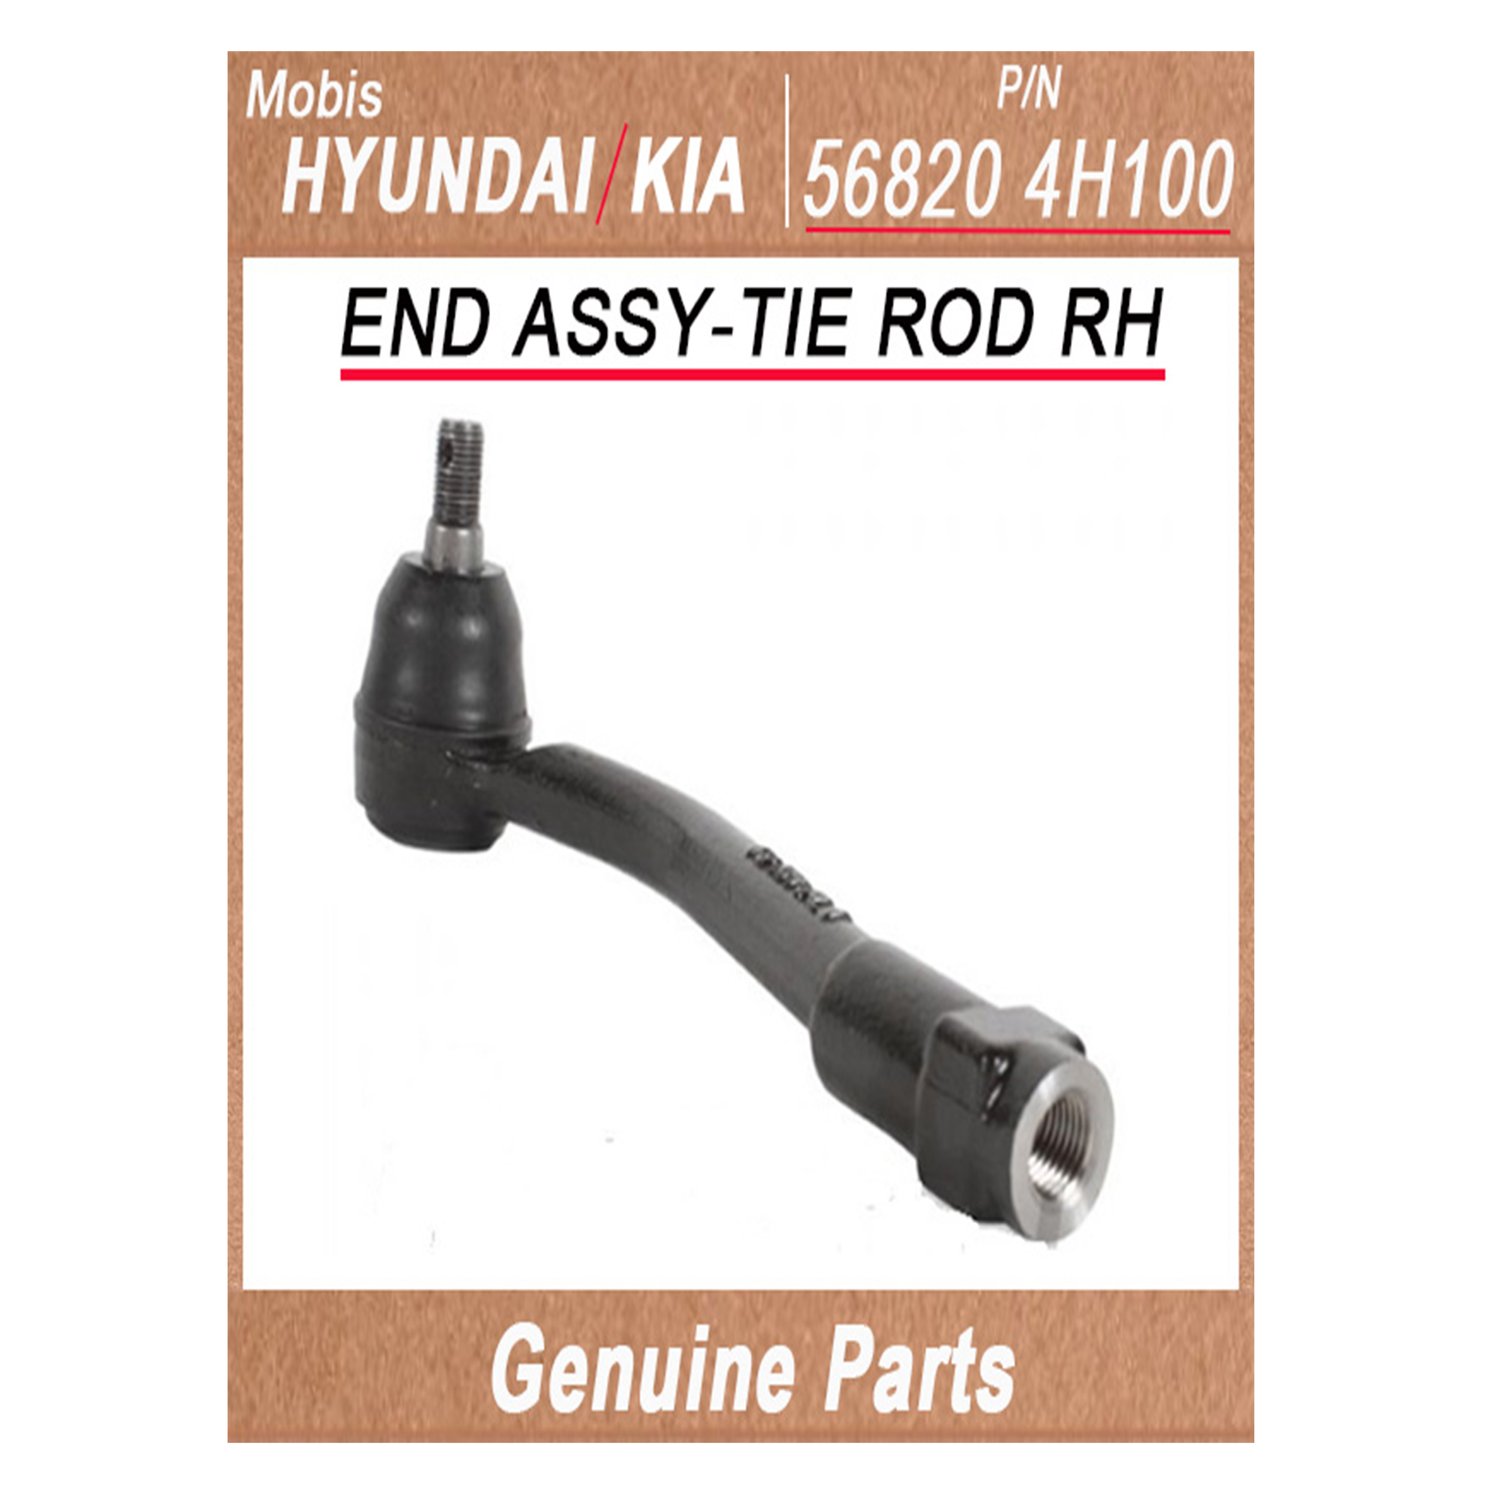 568204H100 _ END ASSY_TIE ROD RH _ Genuine Korean Automotive Spare Parts _ Hyundai Kia _Mobis_